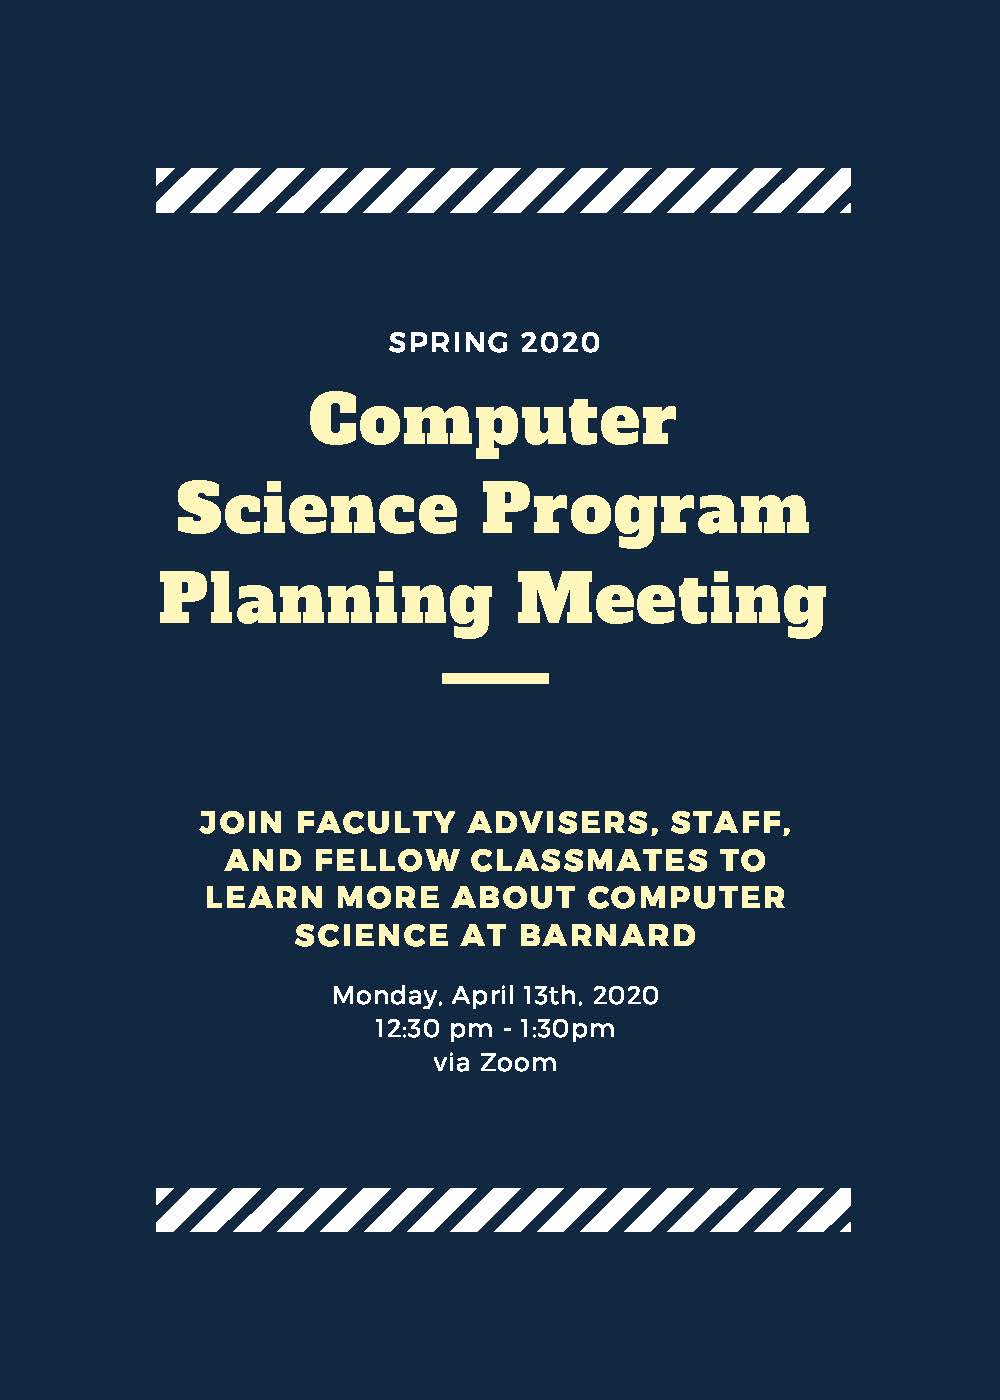 Spring 2020 Program Planning Meeting flyer